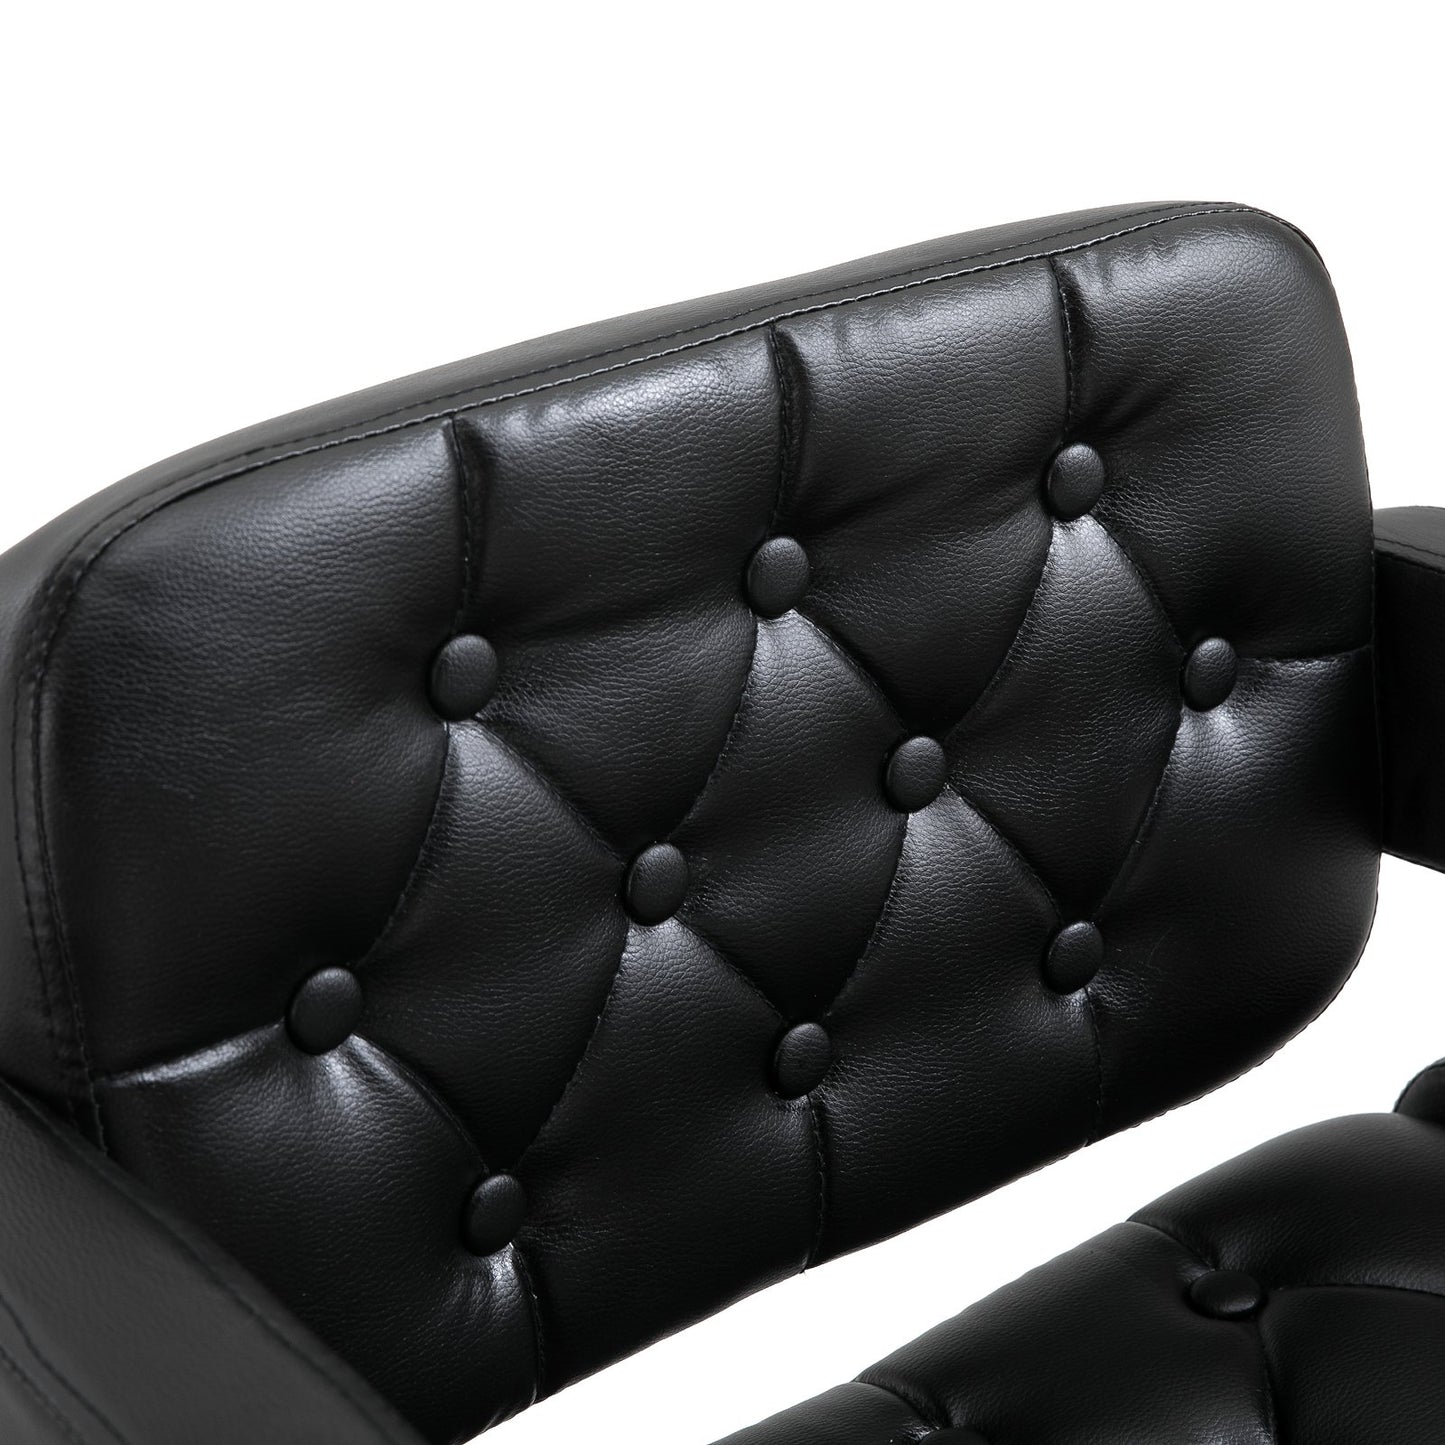 HOMCOM PU Leather Kitchen Bar Stools Swivel Bar Chairs W/Chrome Metal Base - Black